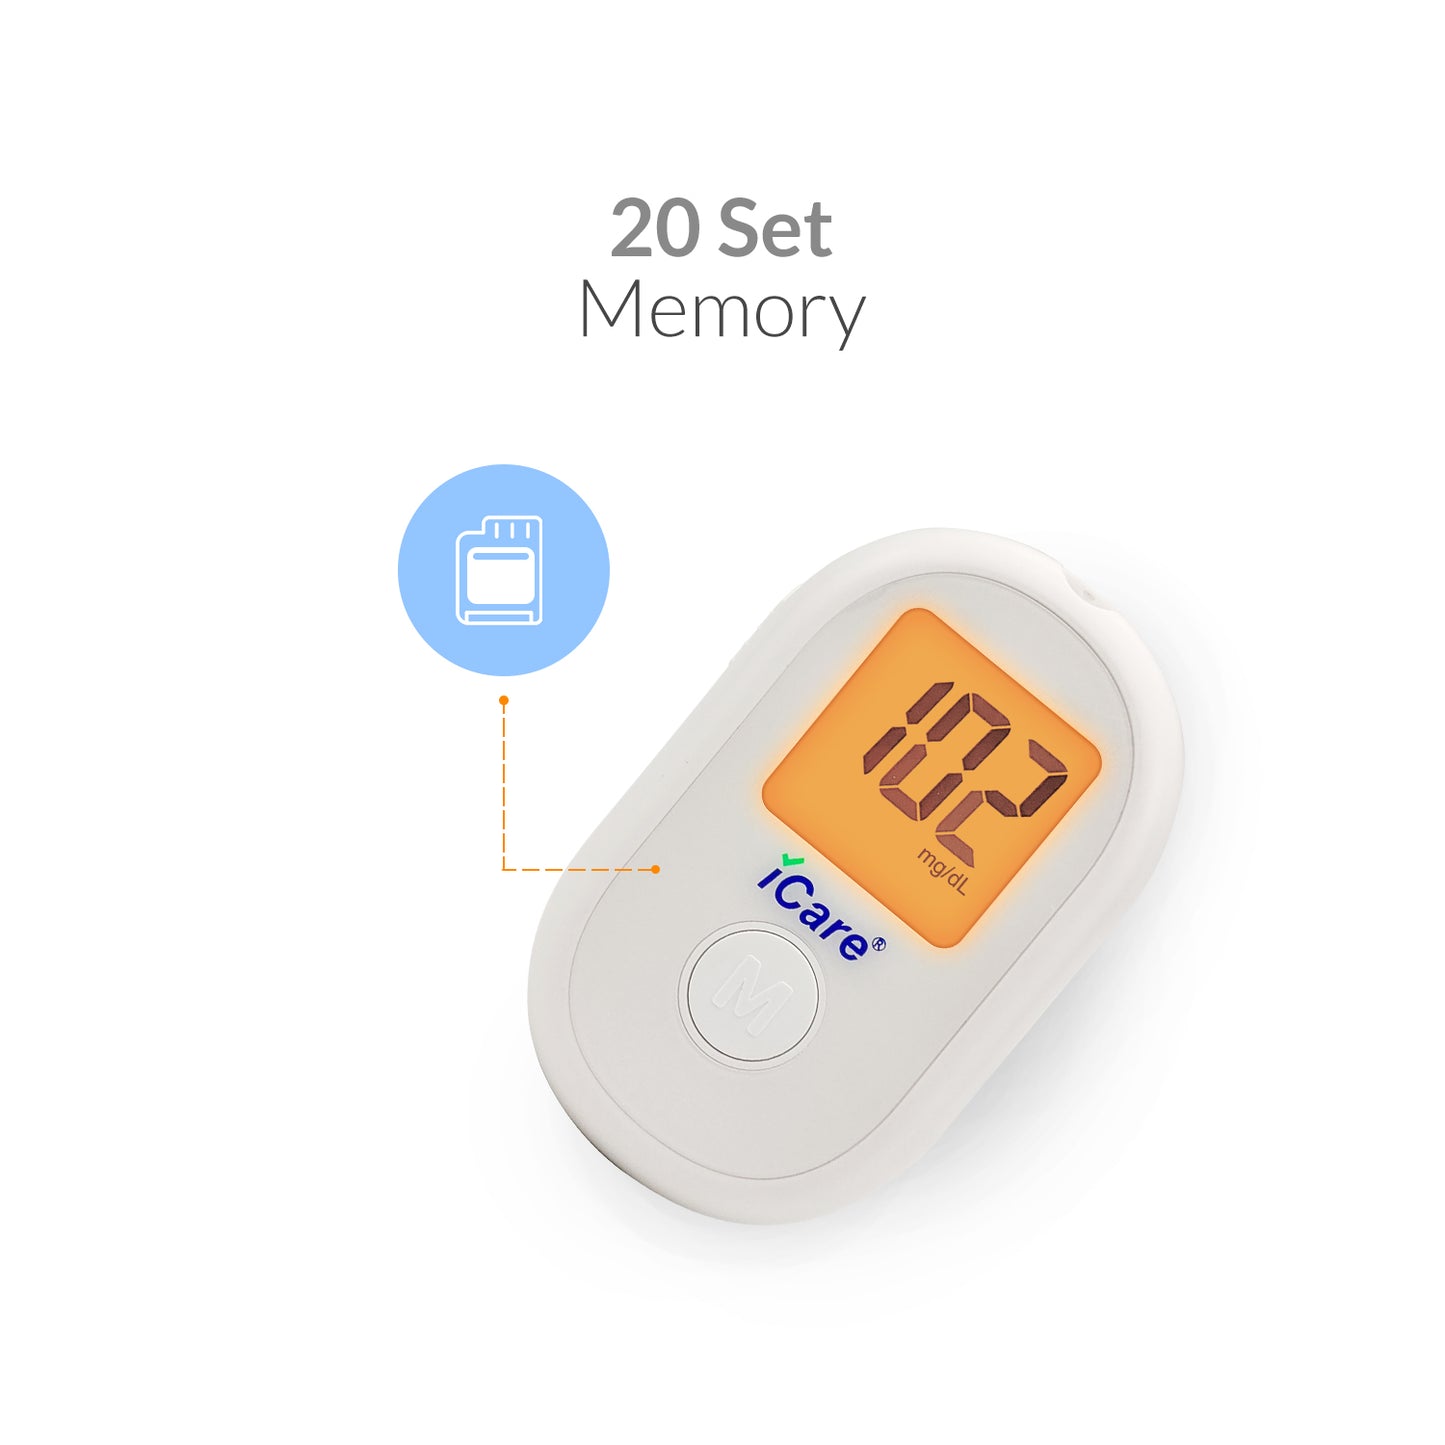 iCare BG003 Blood Glucose Monitor Complete set + 50pcs Test Strips & 50pcs Lancet